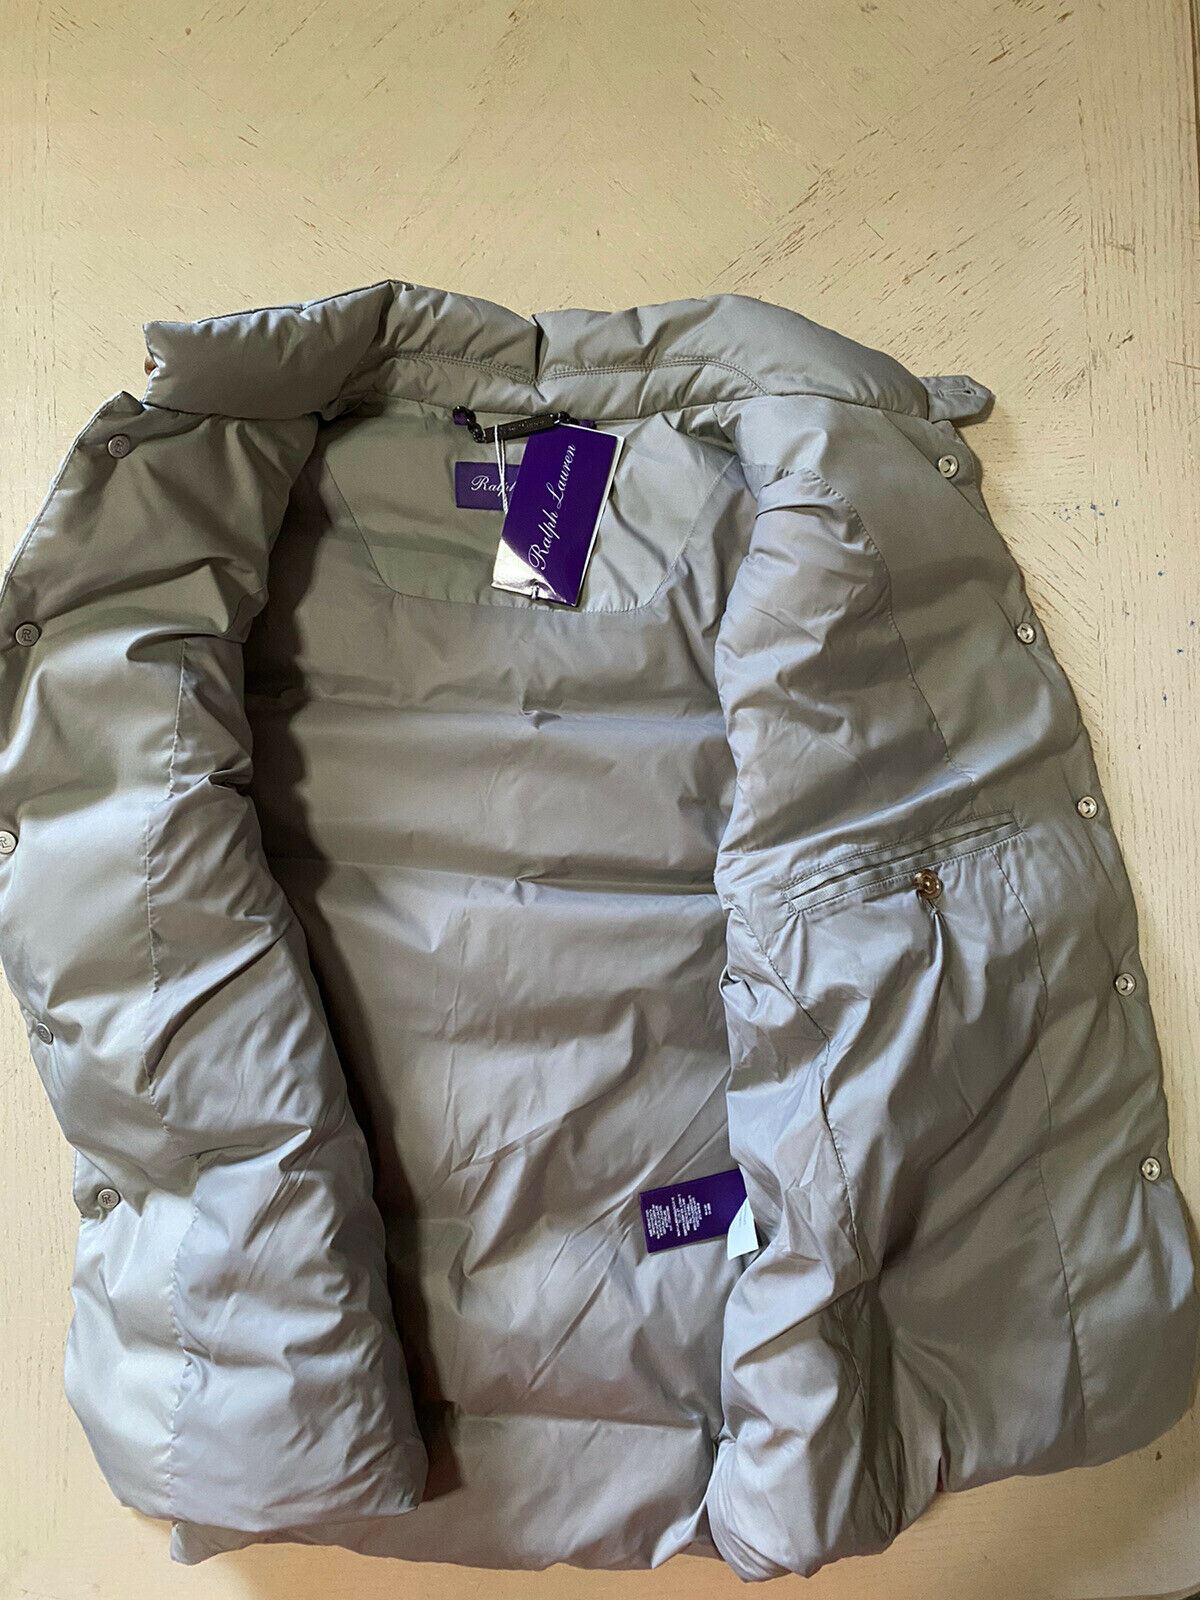 New $995 Ralph Lauren Purple Label Men Whitwell Puffer Vest LT Gray L